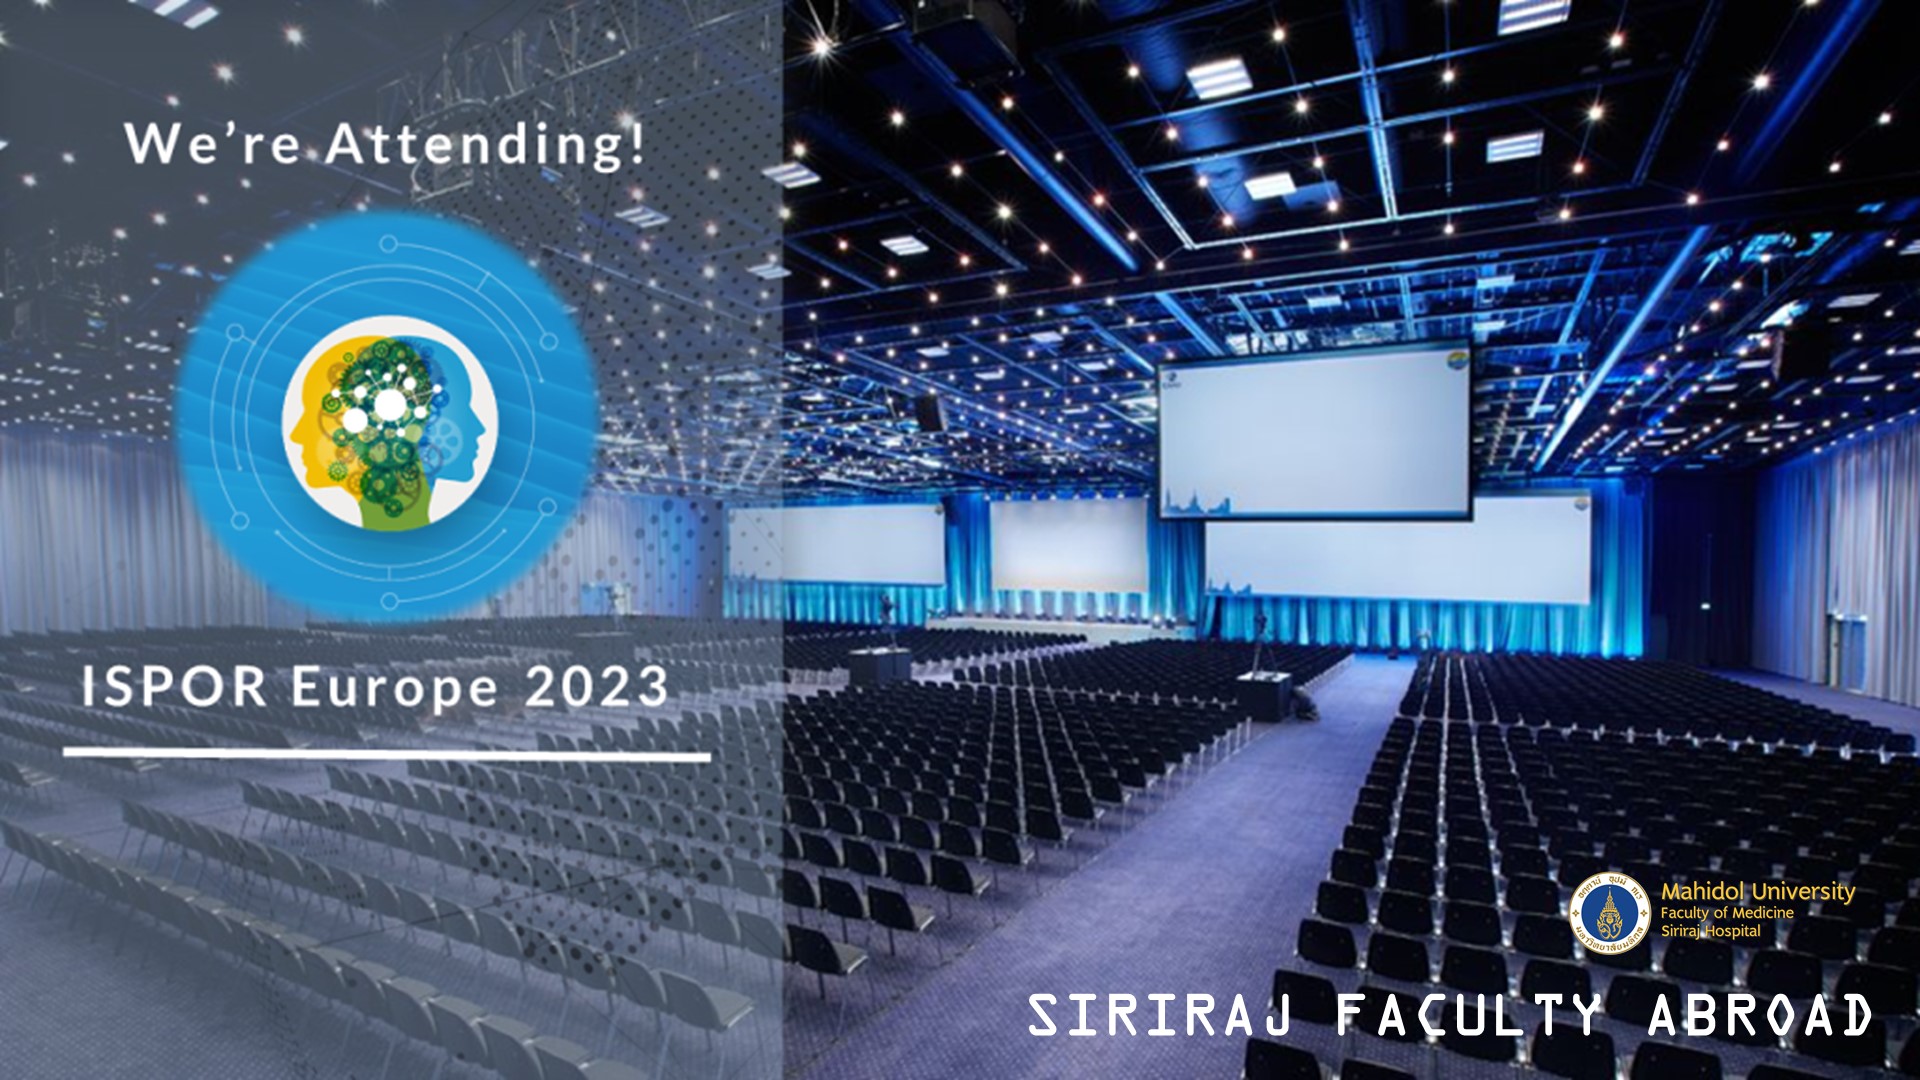 Siriraj Faculty Abroad at ‘ISPOR Europe 2023’ in Denmark